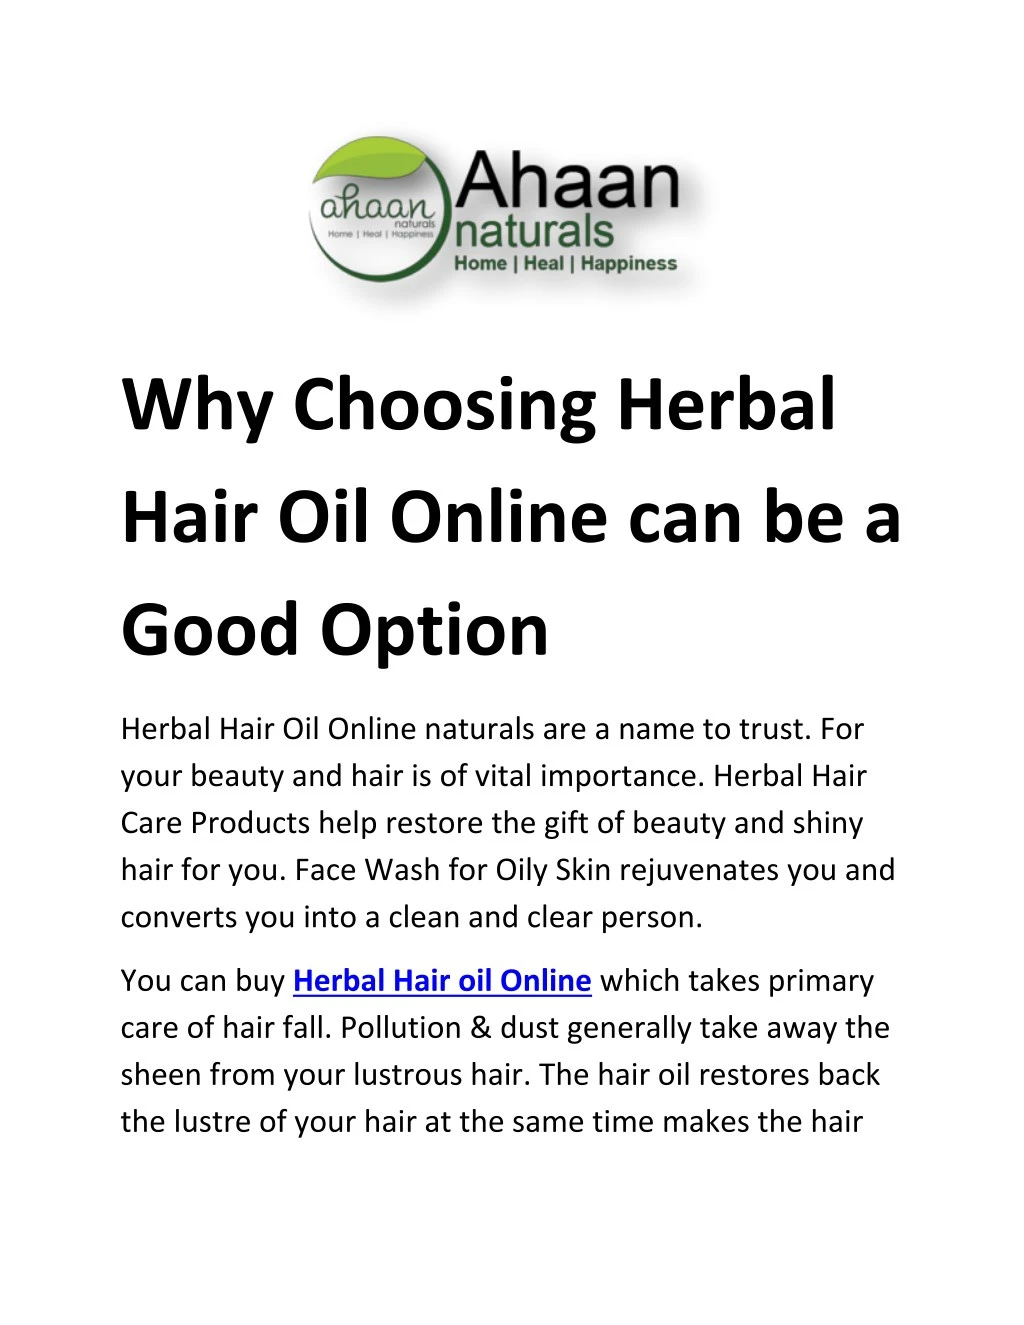 why choosing herbal hair oil online can be a good